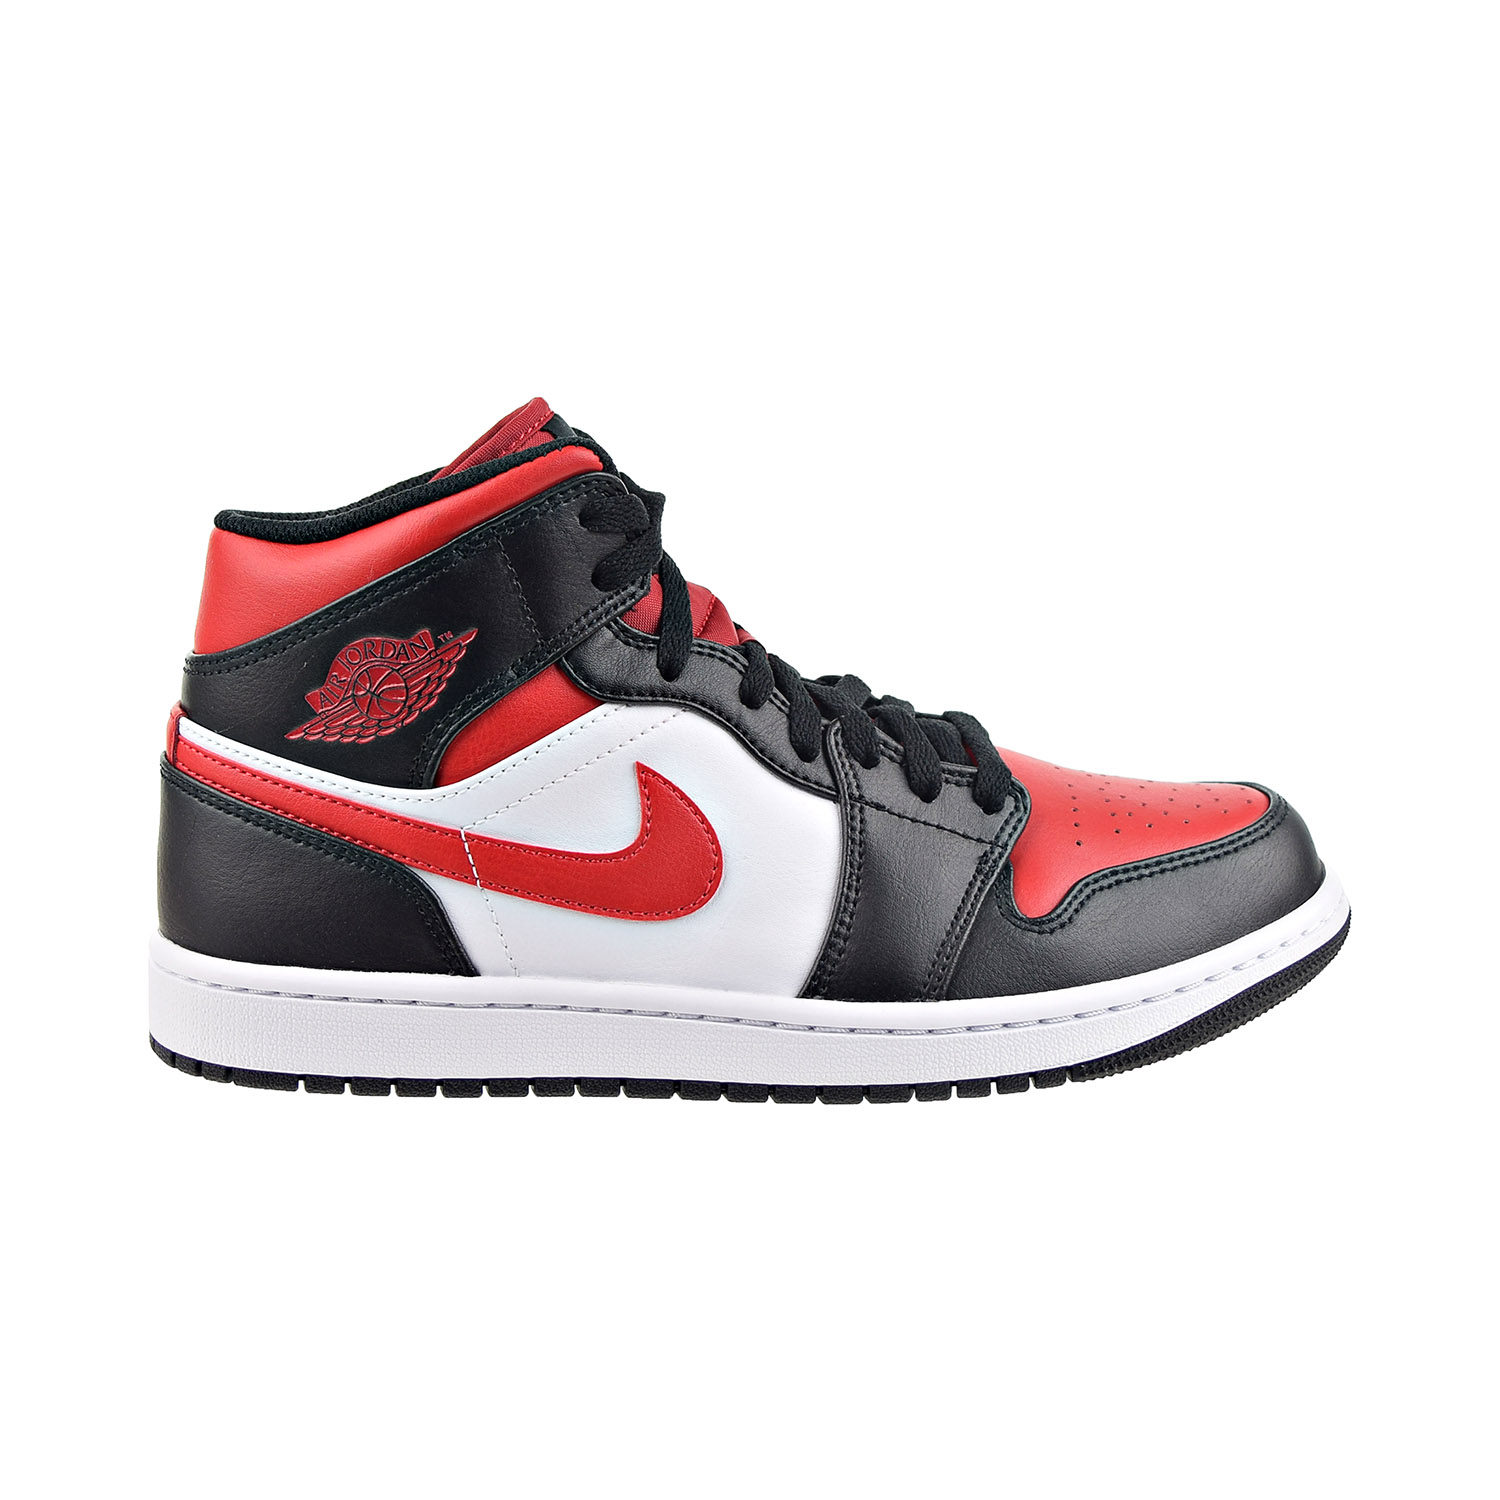 Michael Jordan Air Jordan 1 Mid "Bred Toe" Men's Shoes Black-Fire Red-White 554724-079